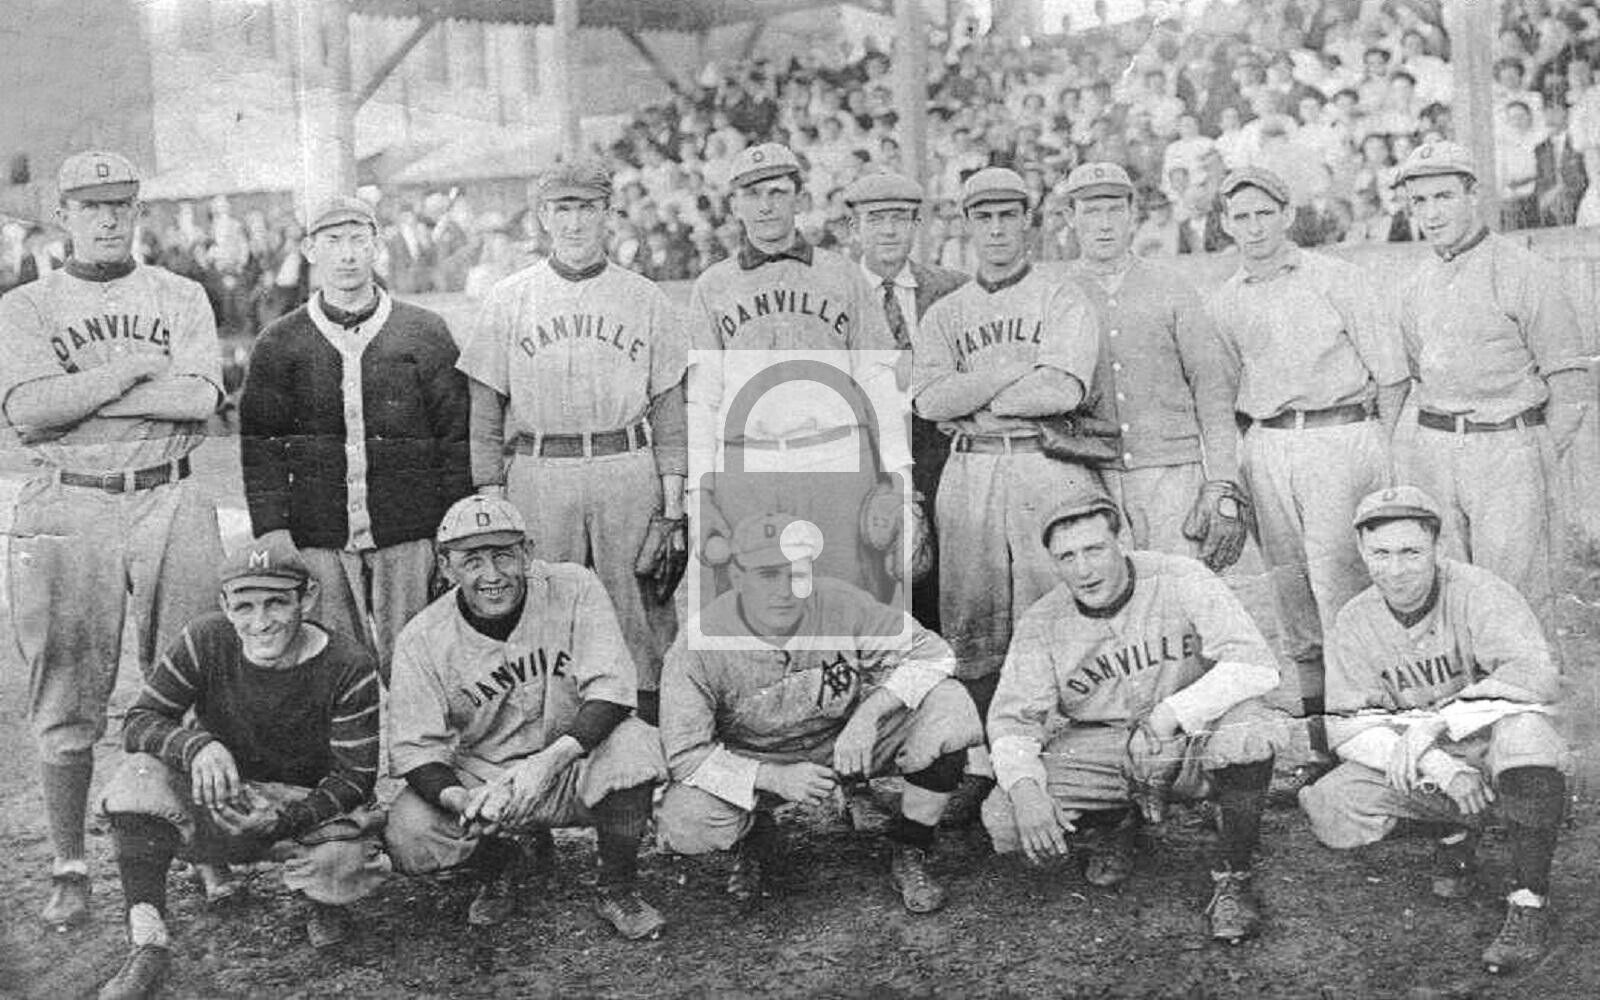 Baseball Team Danville Pennsylvania PA - 4x6 Reprint